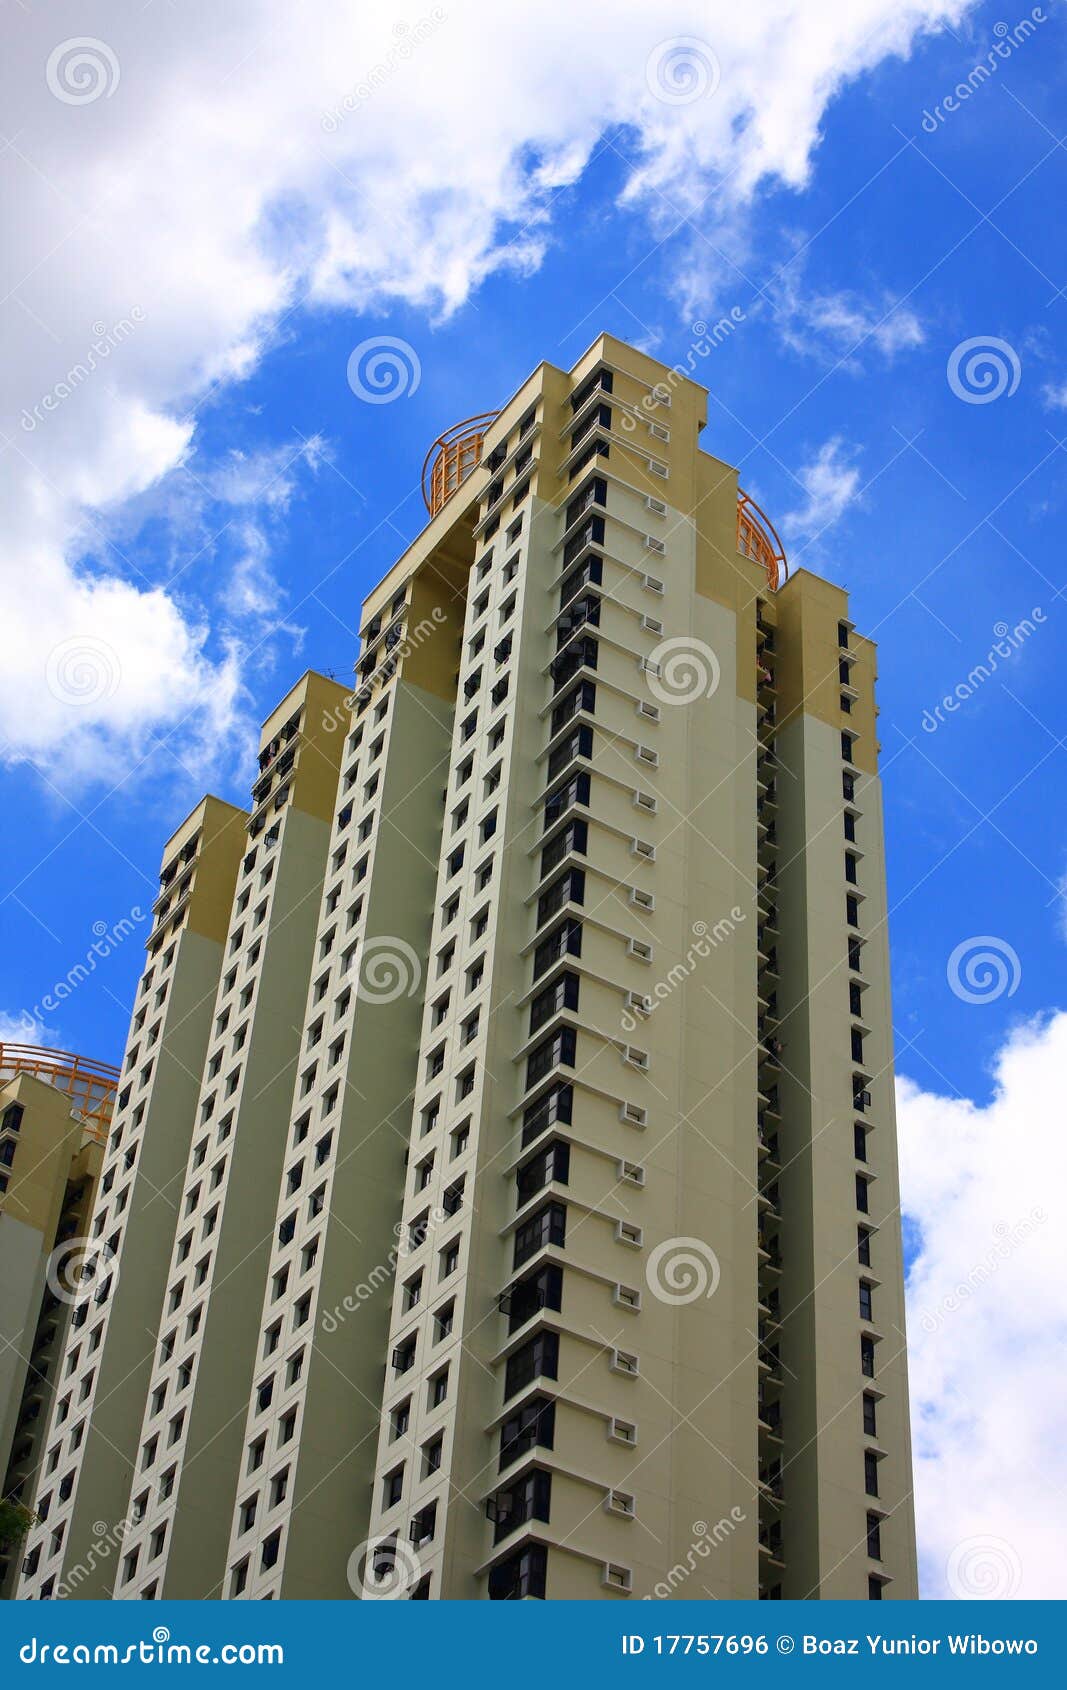 high-rise apartment building